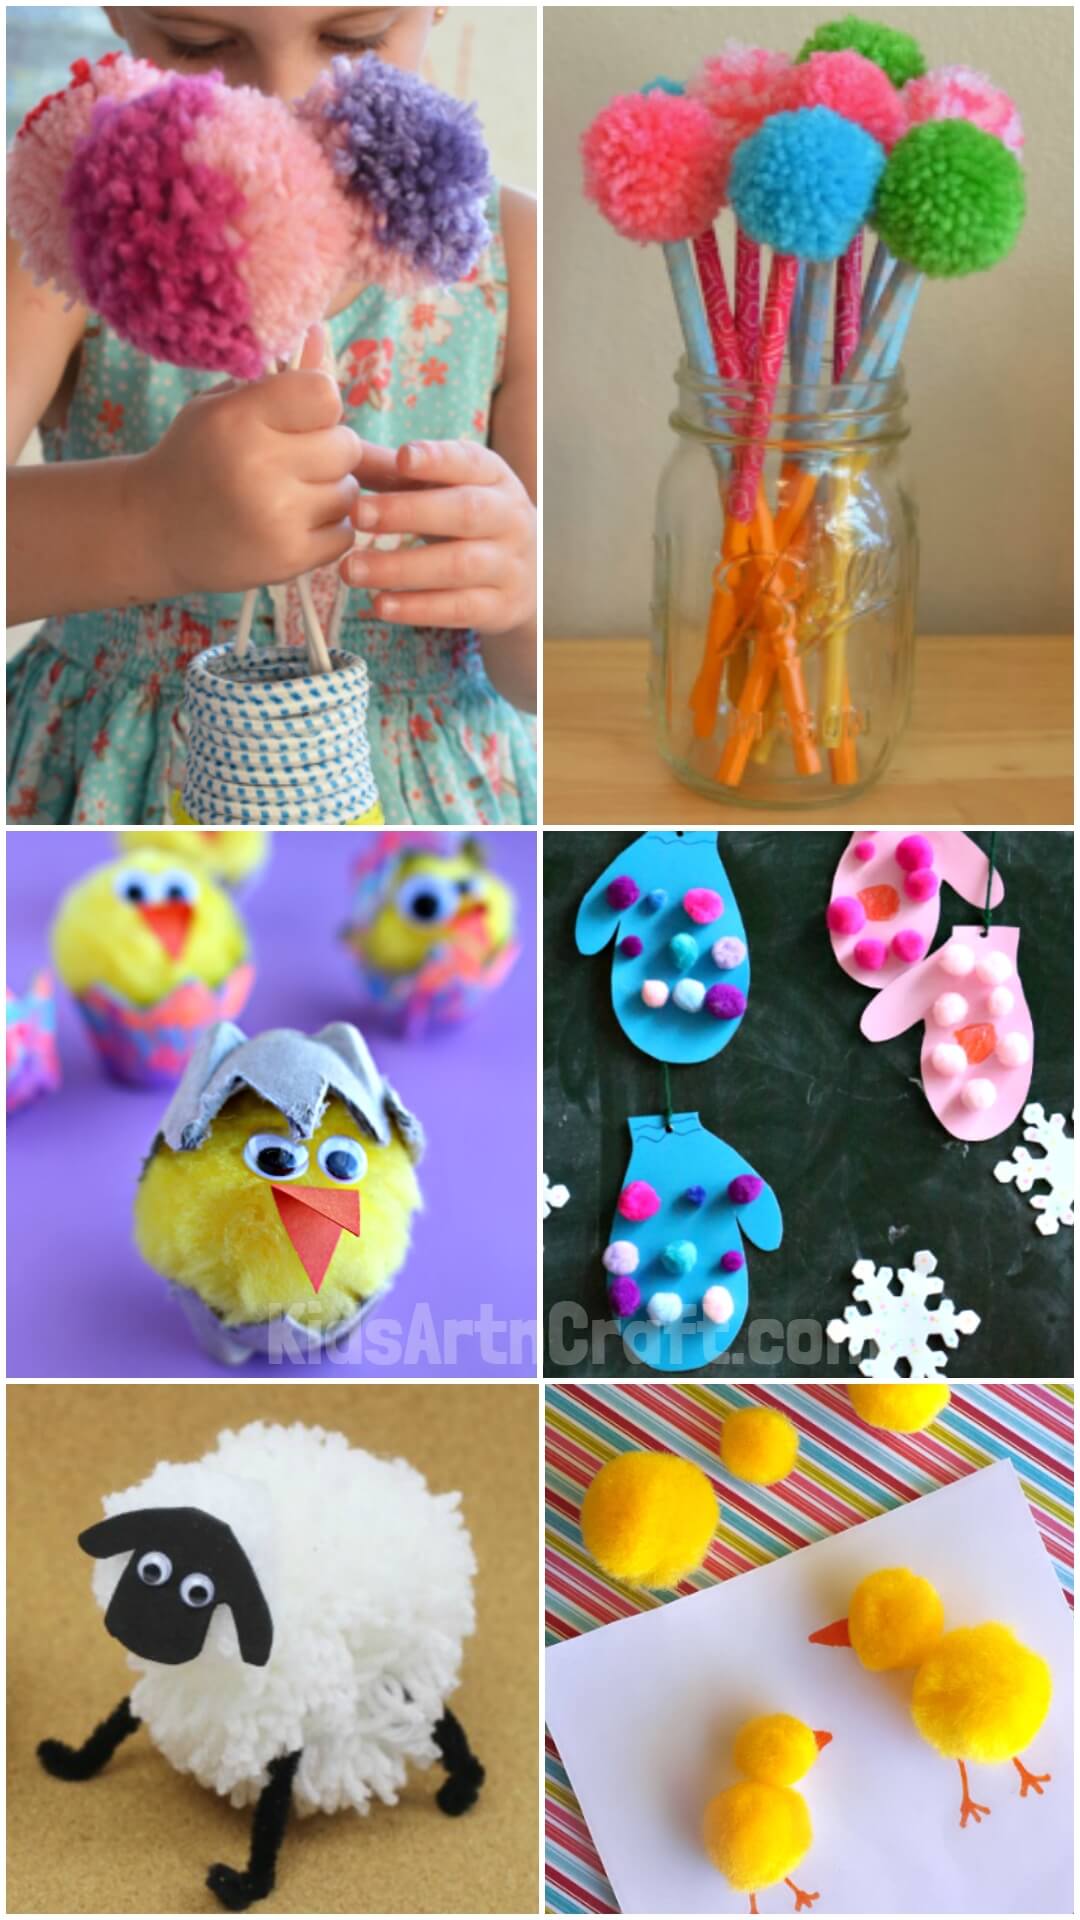 Amazing DIY Pom Pom Crafts for Kids to Make and Play